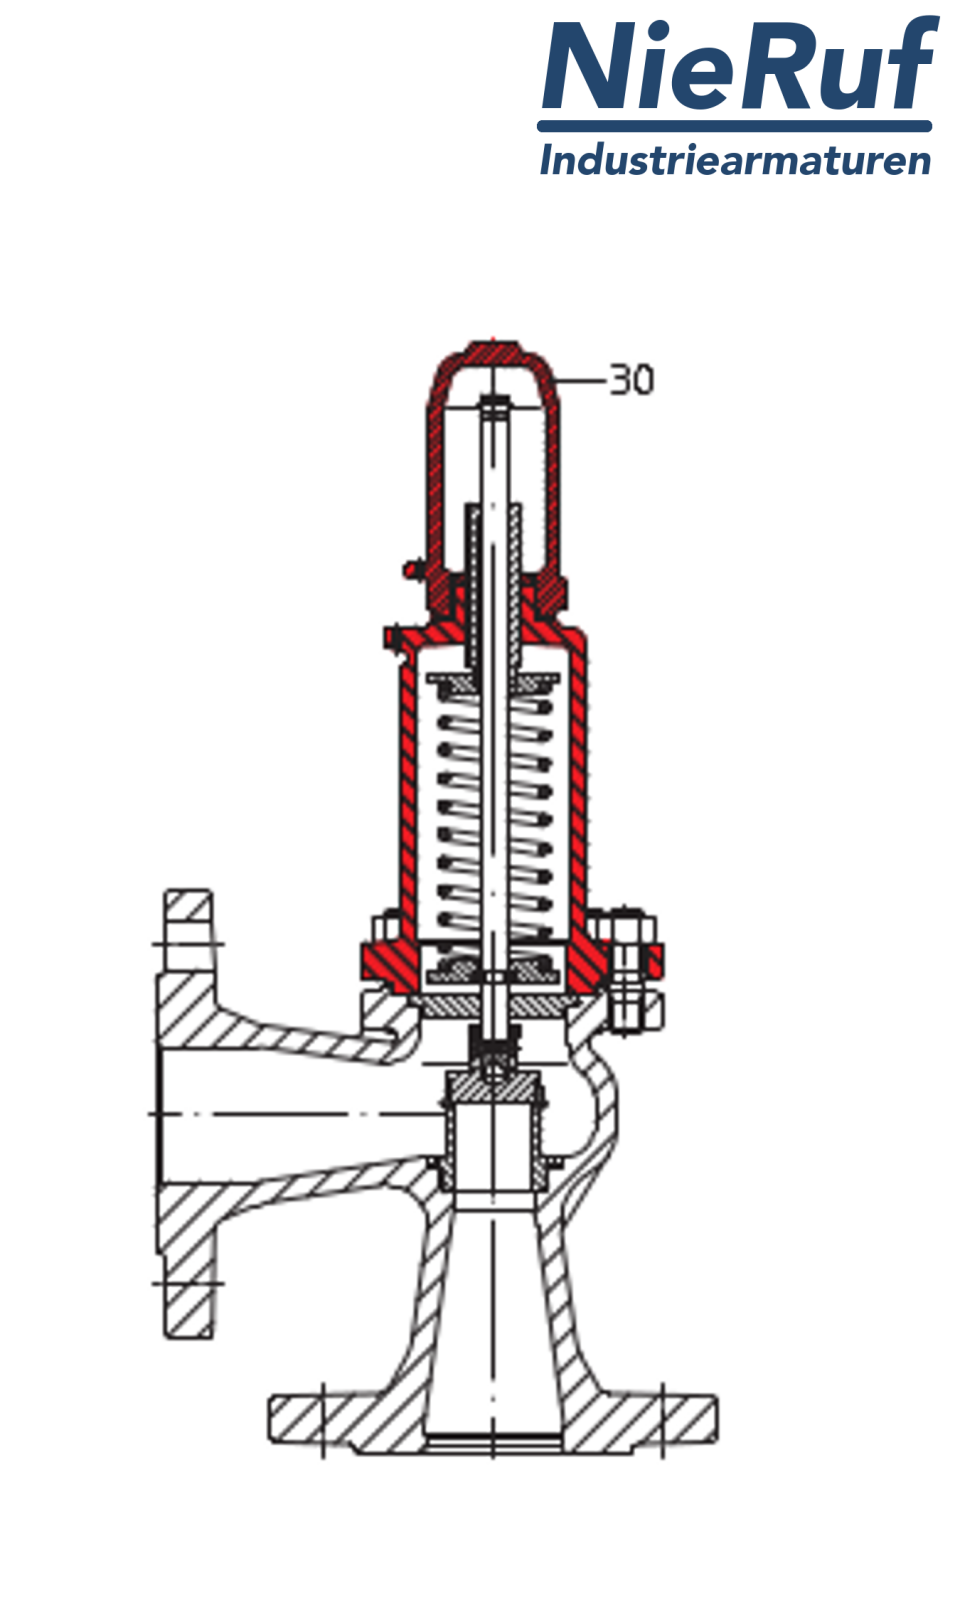 flange-safety valve DN25/DN25 SF0101, cast iron EN-JL1040 metal, without lever